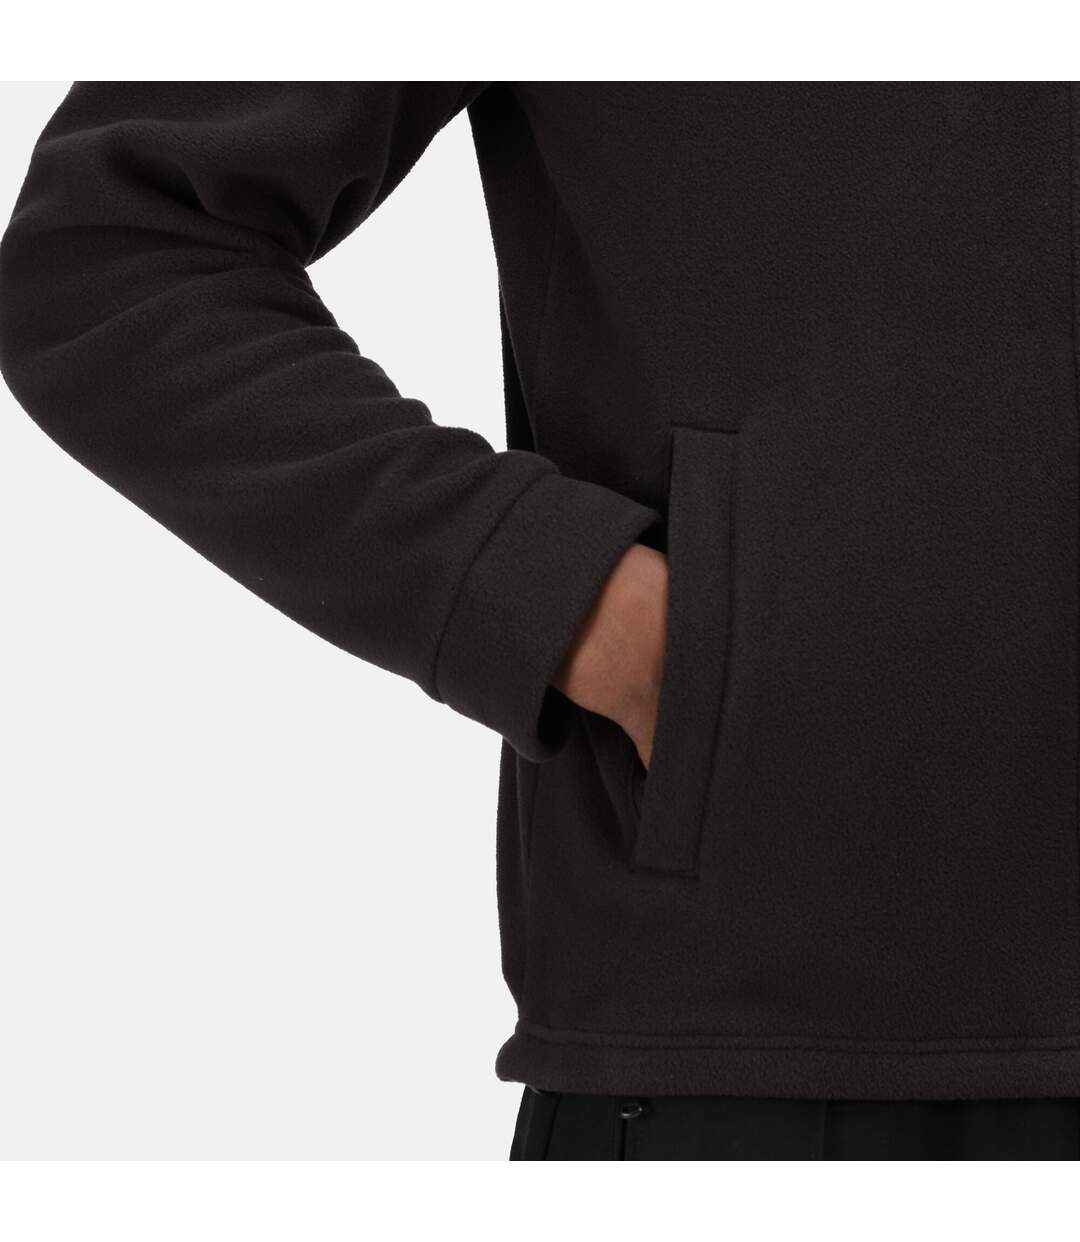 Regatta Mens Coverup Full Zip Fleece Jacket (Black) - UTRG6061